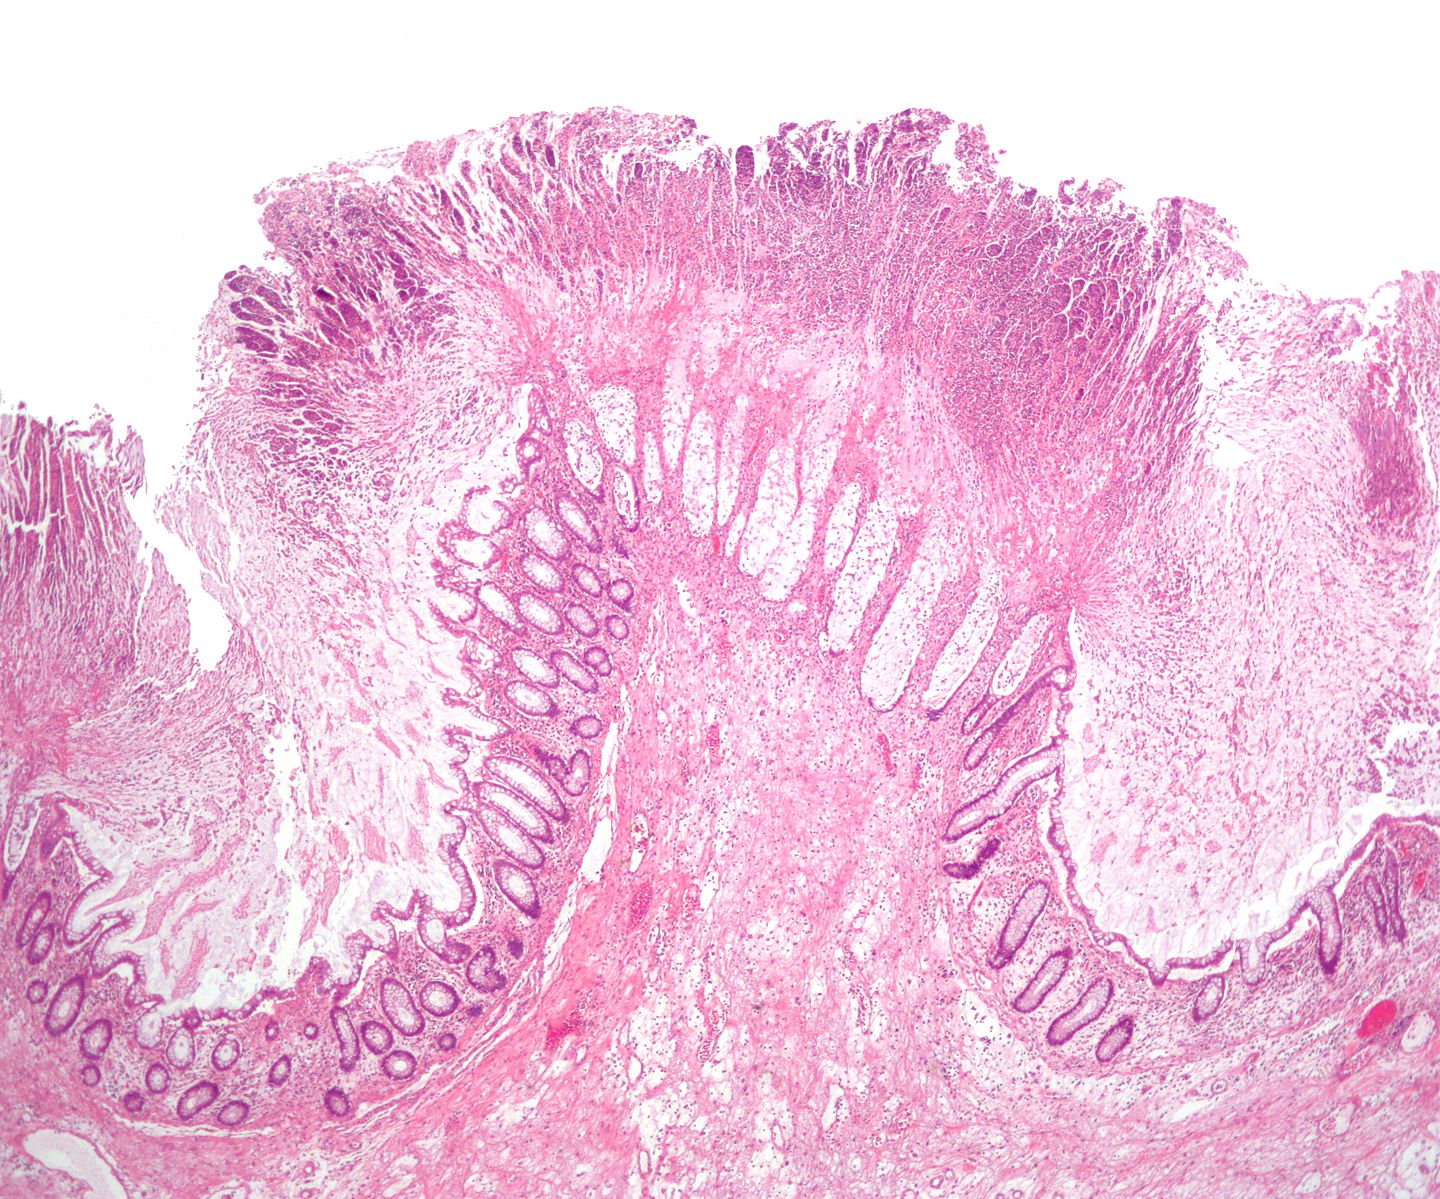 Pseudomembranous colitis. H& E staining showing pseudomembranes in Clostridium colitis [23]